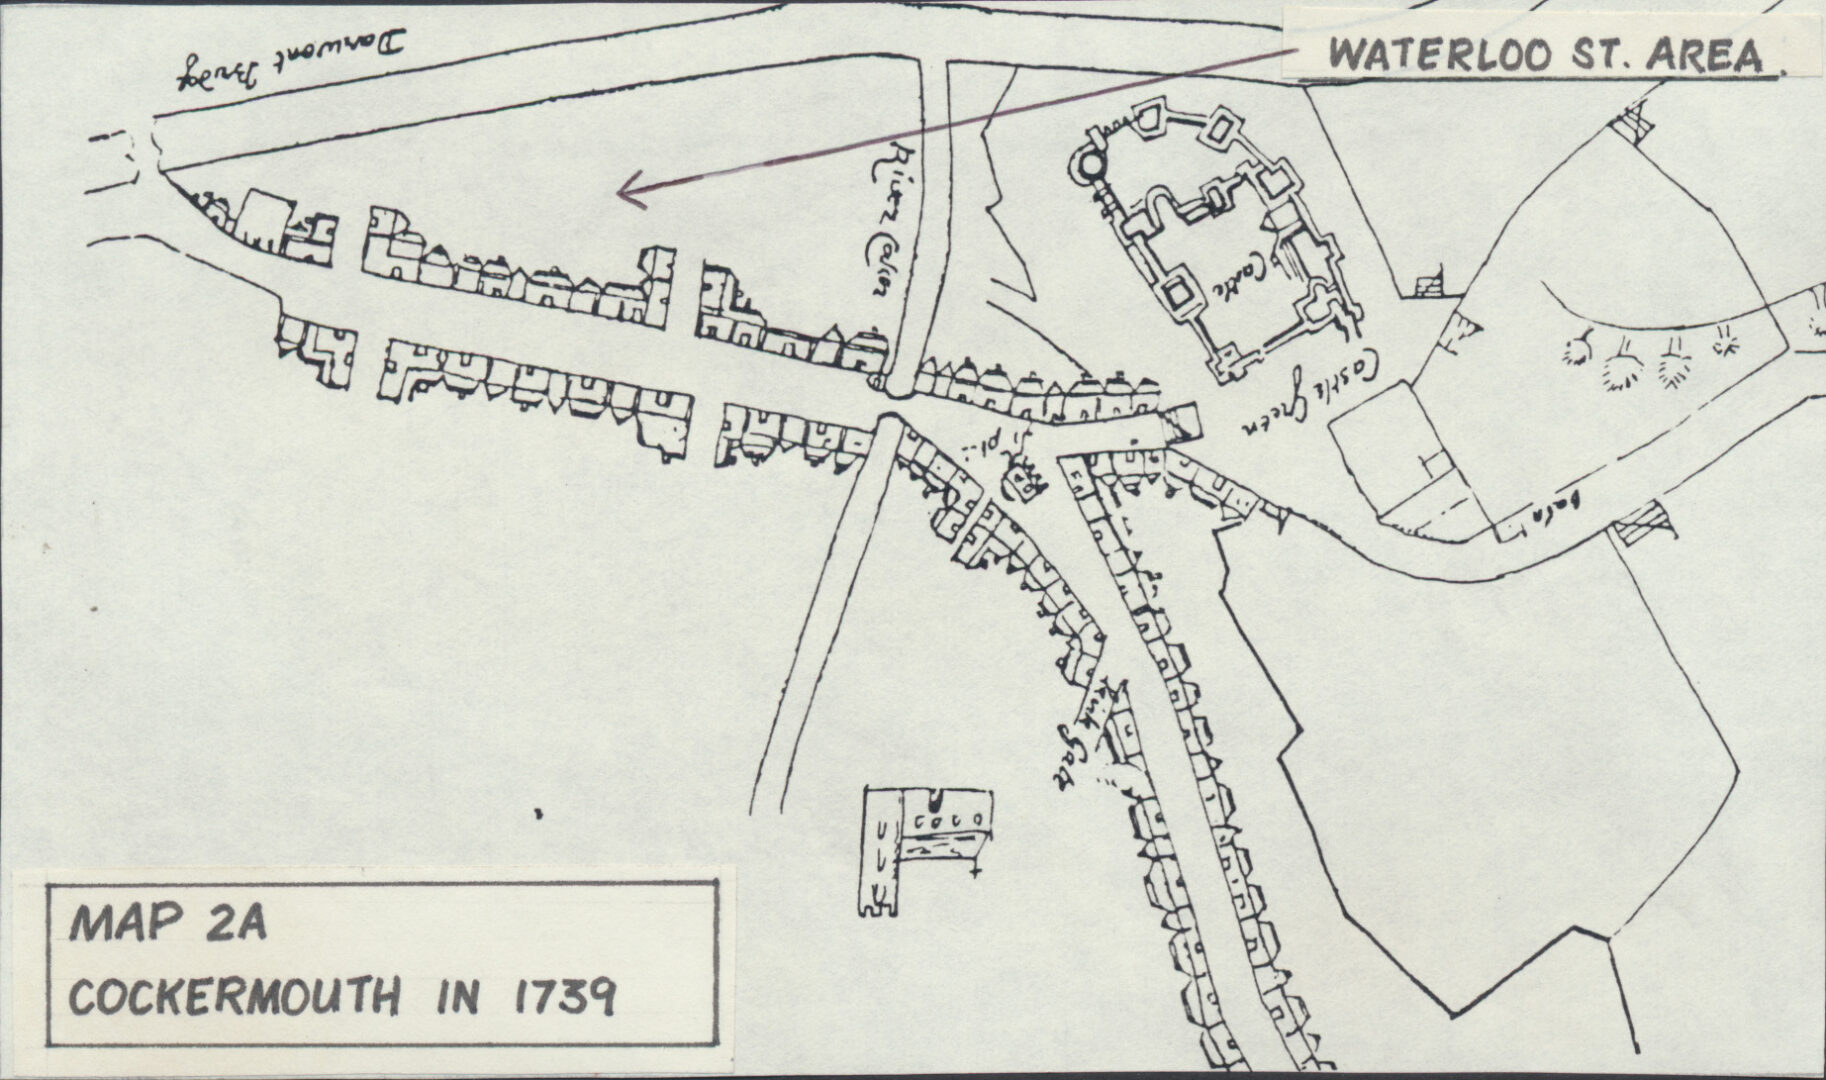 Map 02a 1739 Cockermouth Waterloo Street Area 1826x1080 